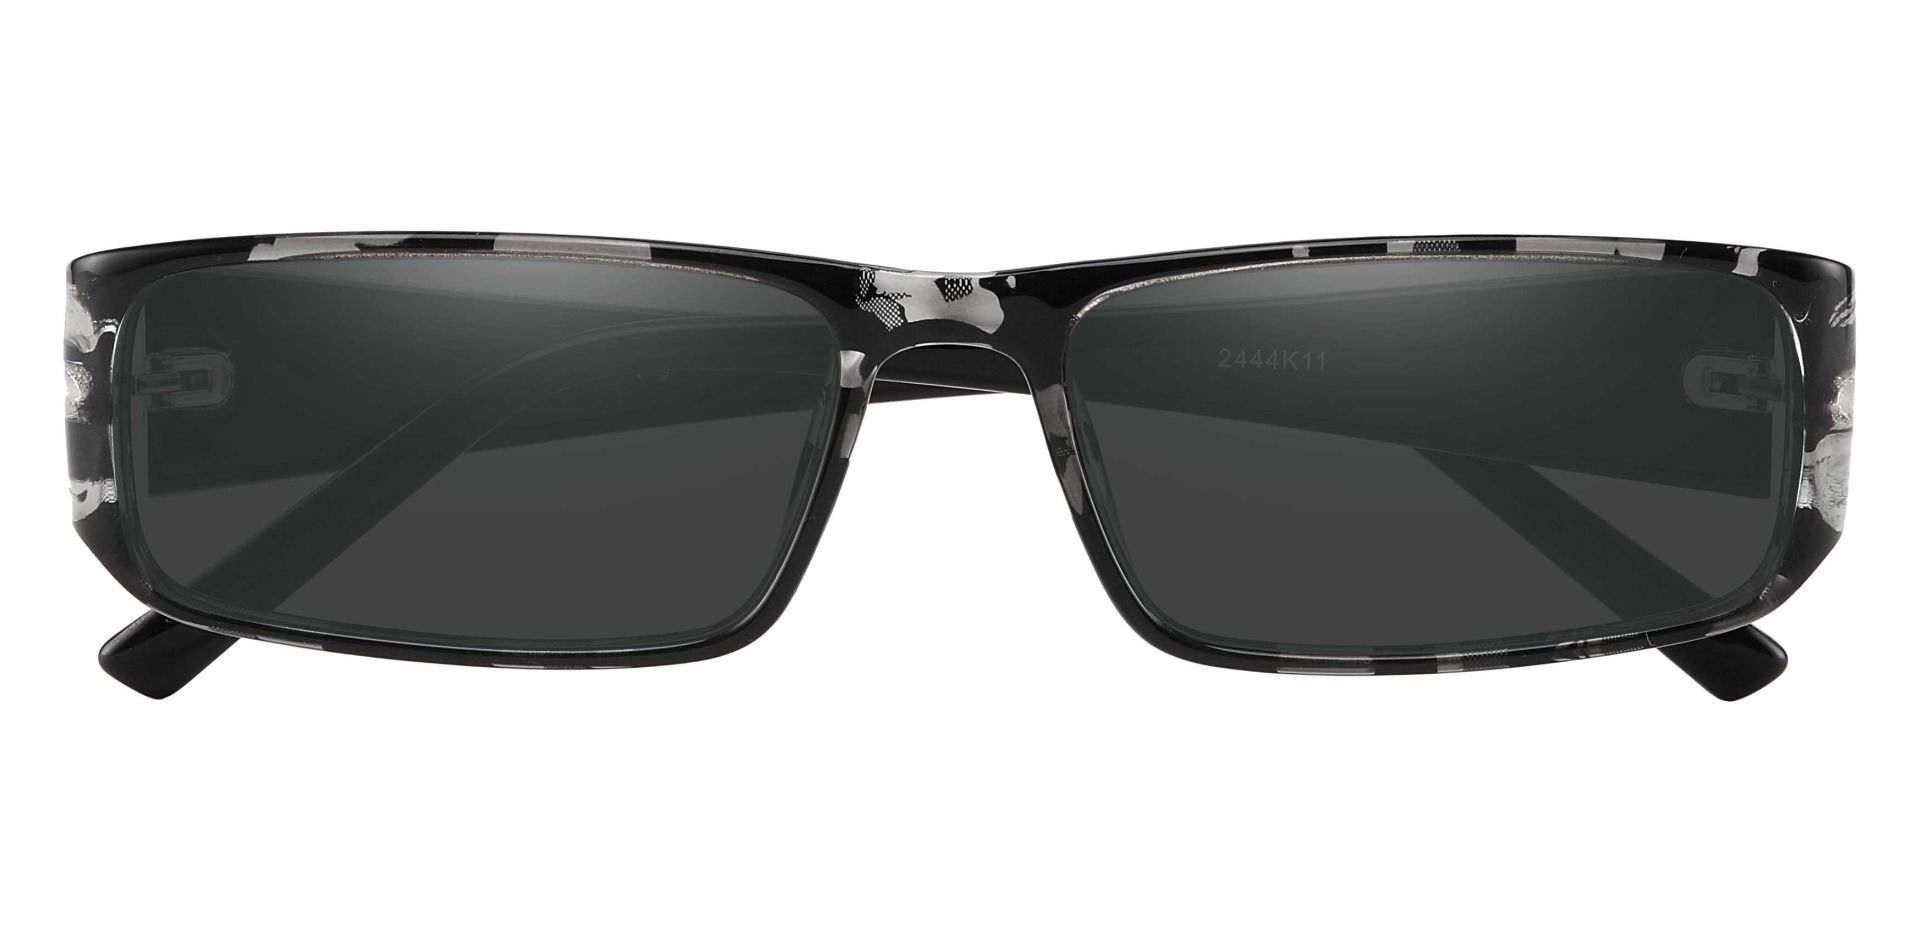 Elbert Rectangle Single Vision Sunglasses - Black Frame With Gray Lenses